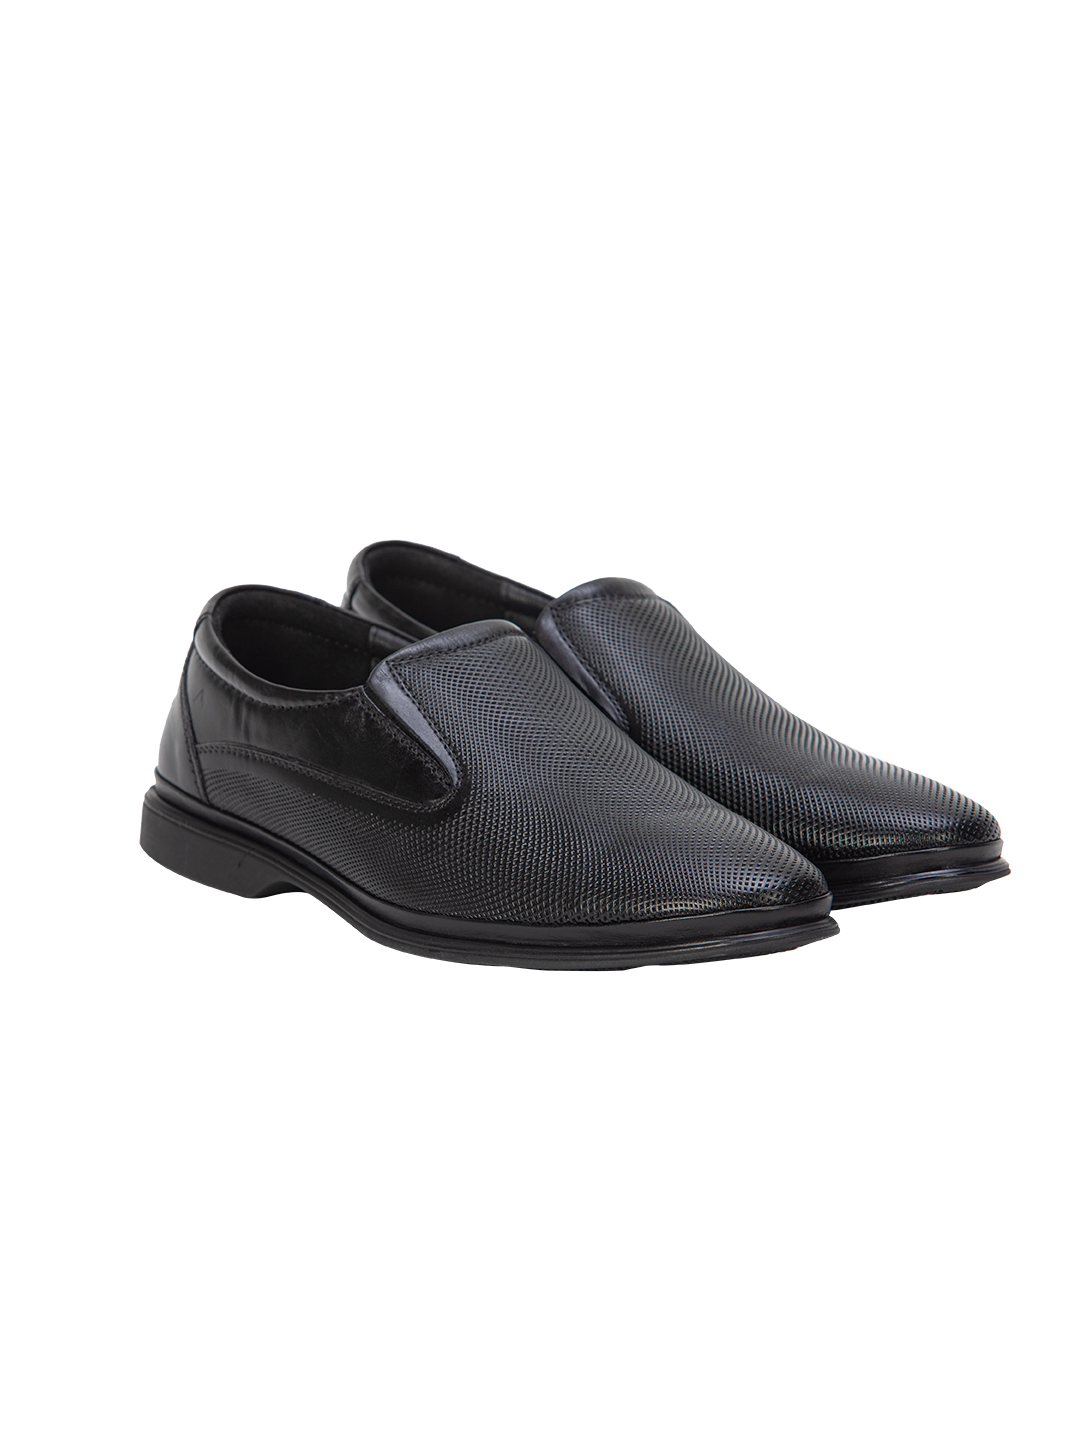 Buy Von Wellx Germany Comfort Mondaine Casual Black Shoes Online in Kochi